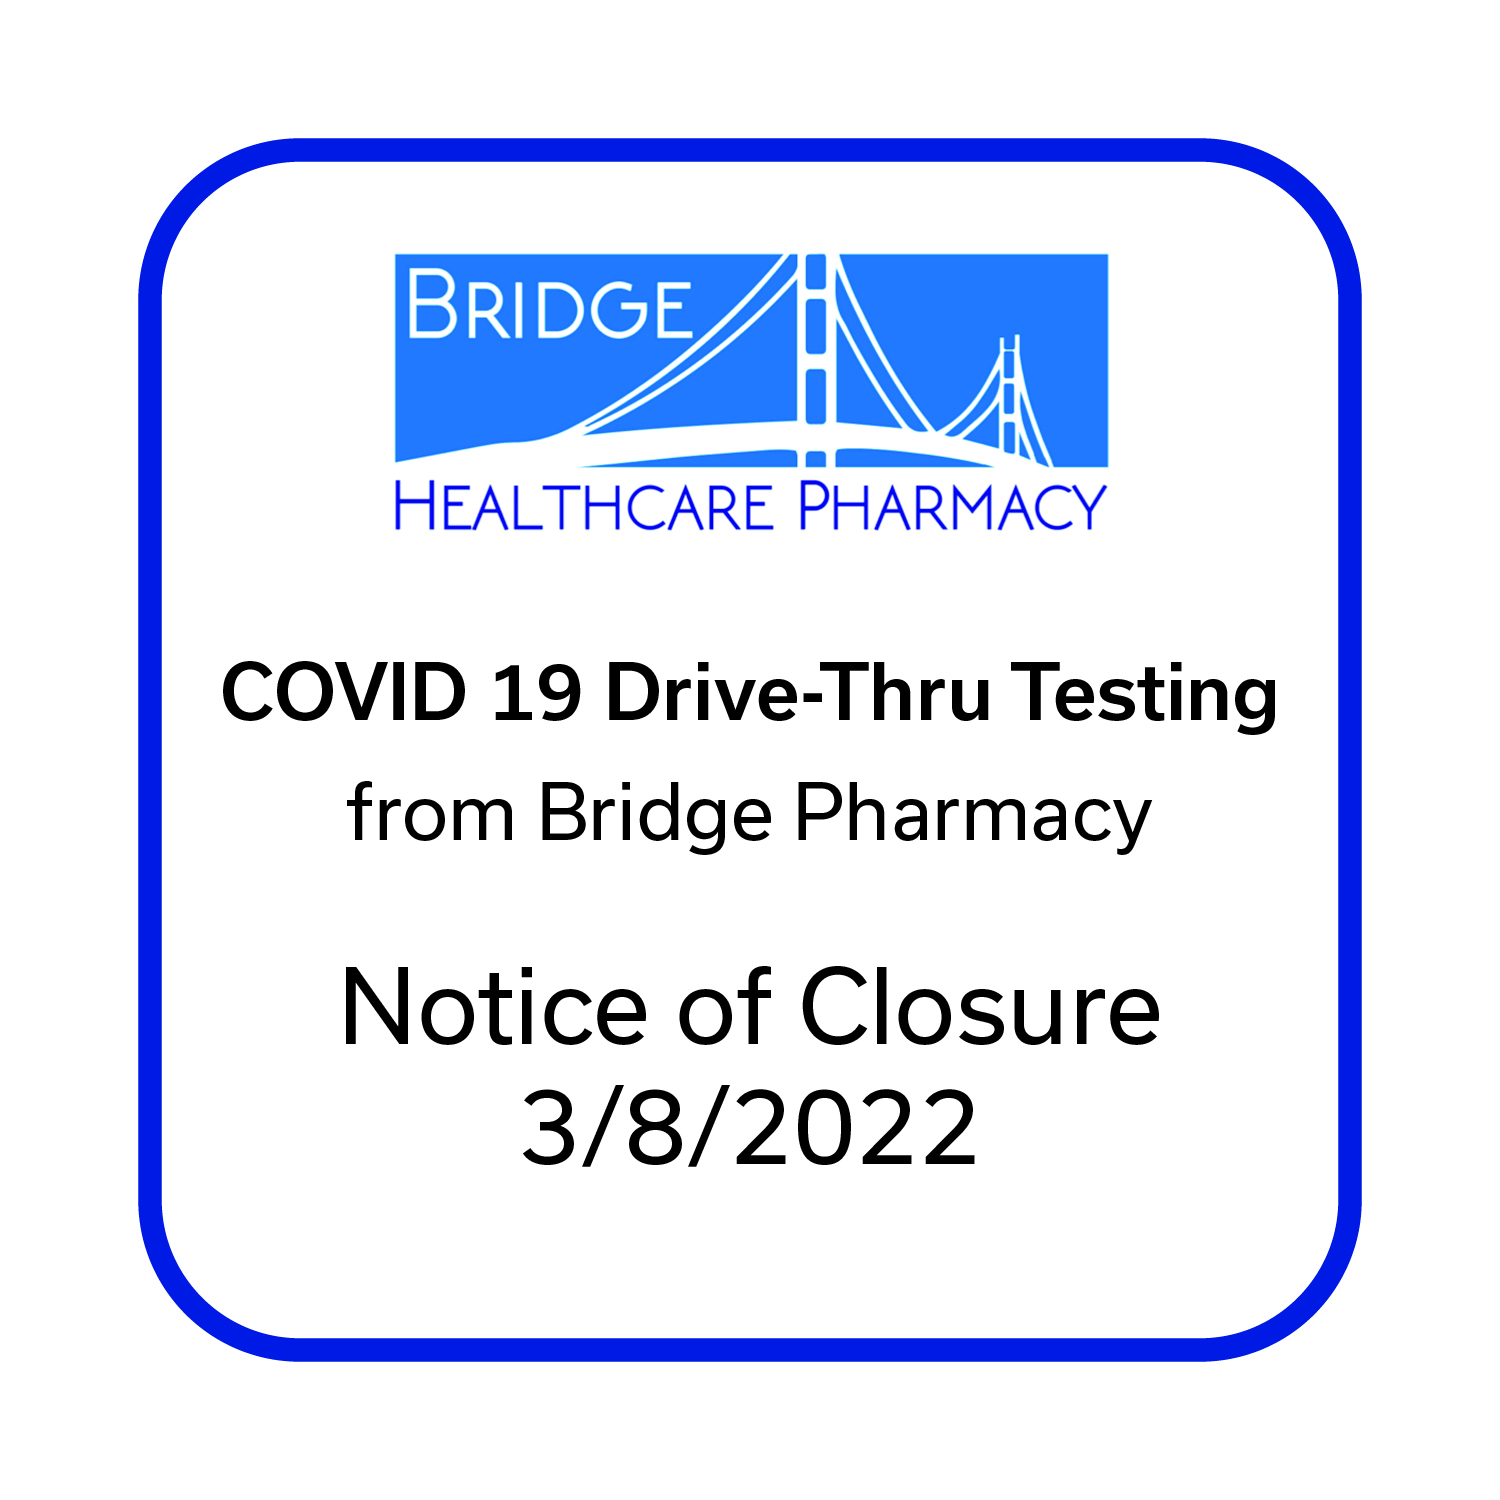 Bridge Pharmacy COVID Drive-thru testing NOTICE OF CLOSURE